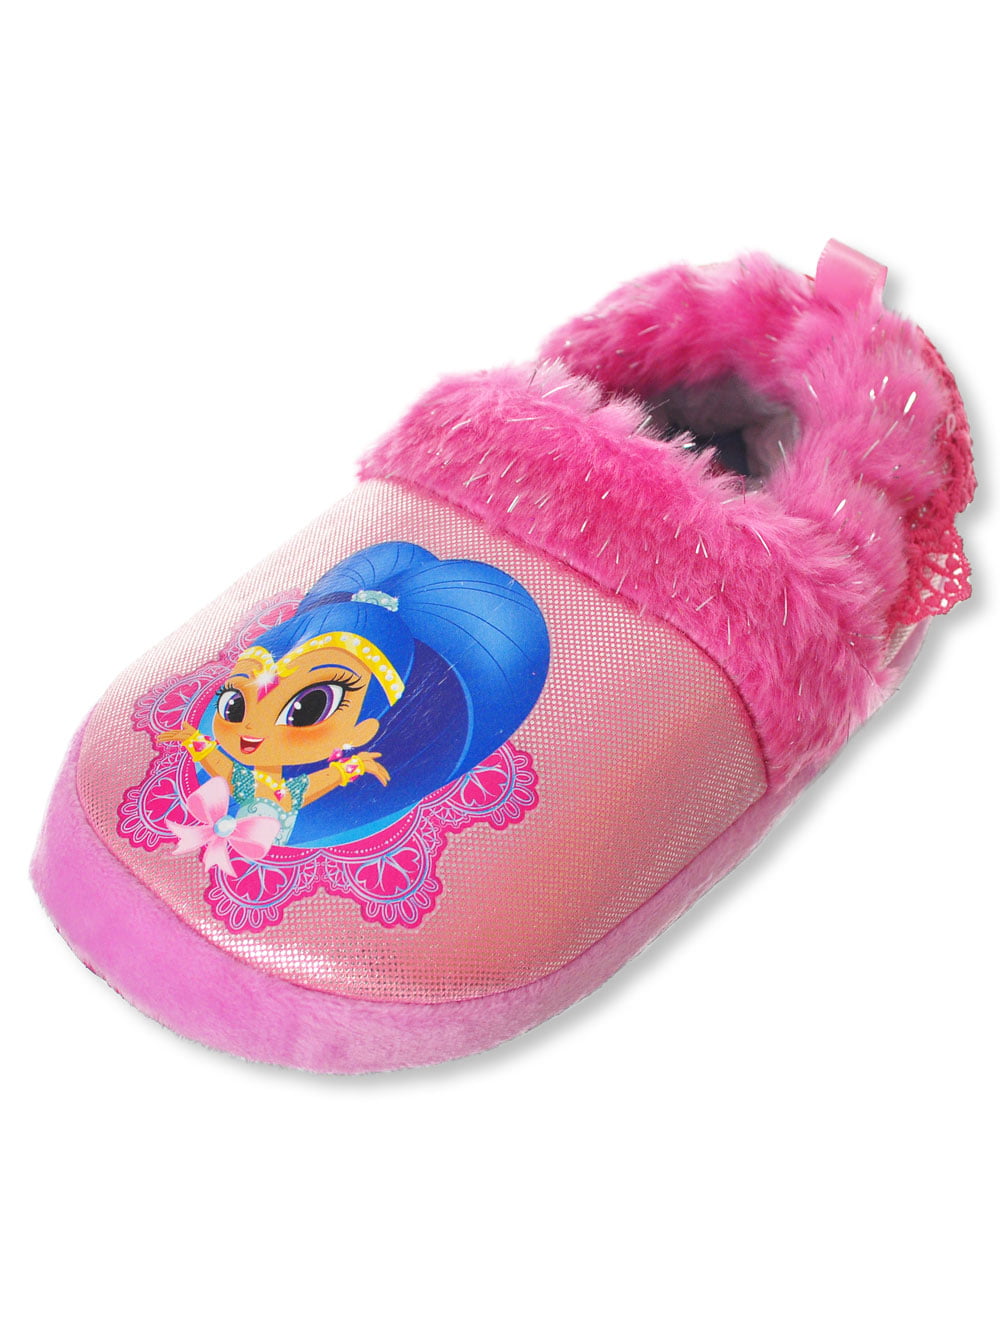 stylish girls slippers